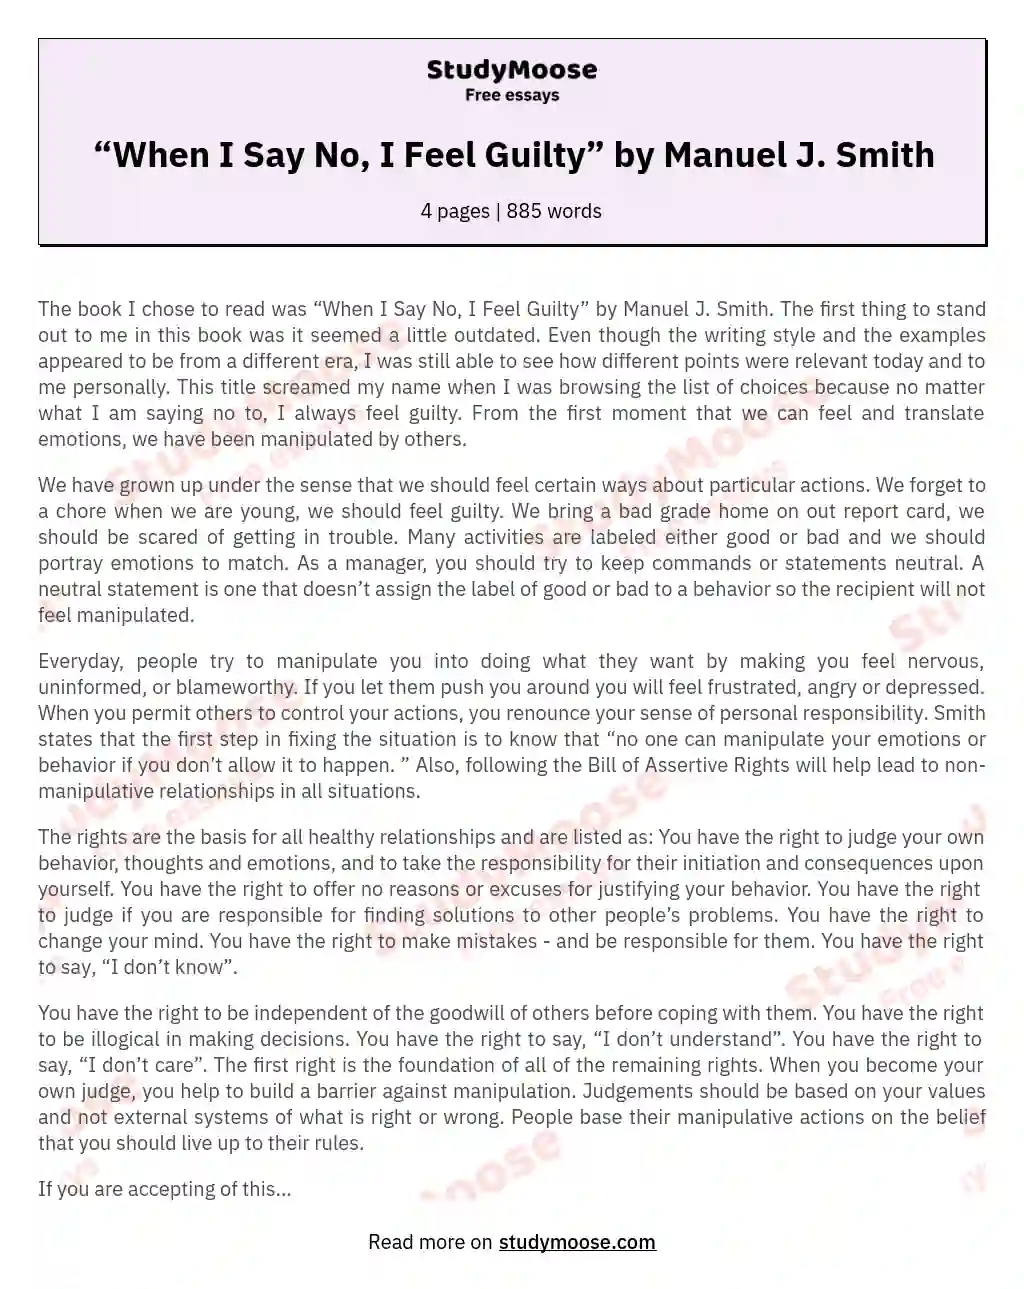 “When I Say No, I Feel Guilty” by Manuel J. Smith essay